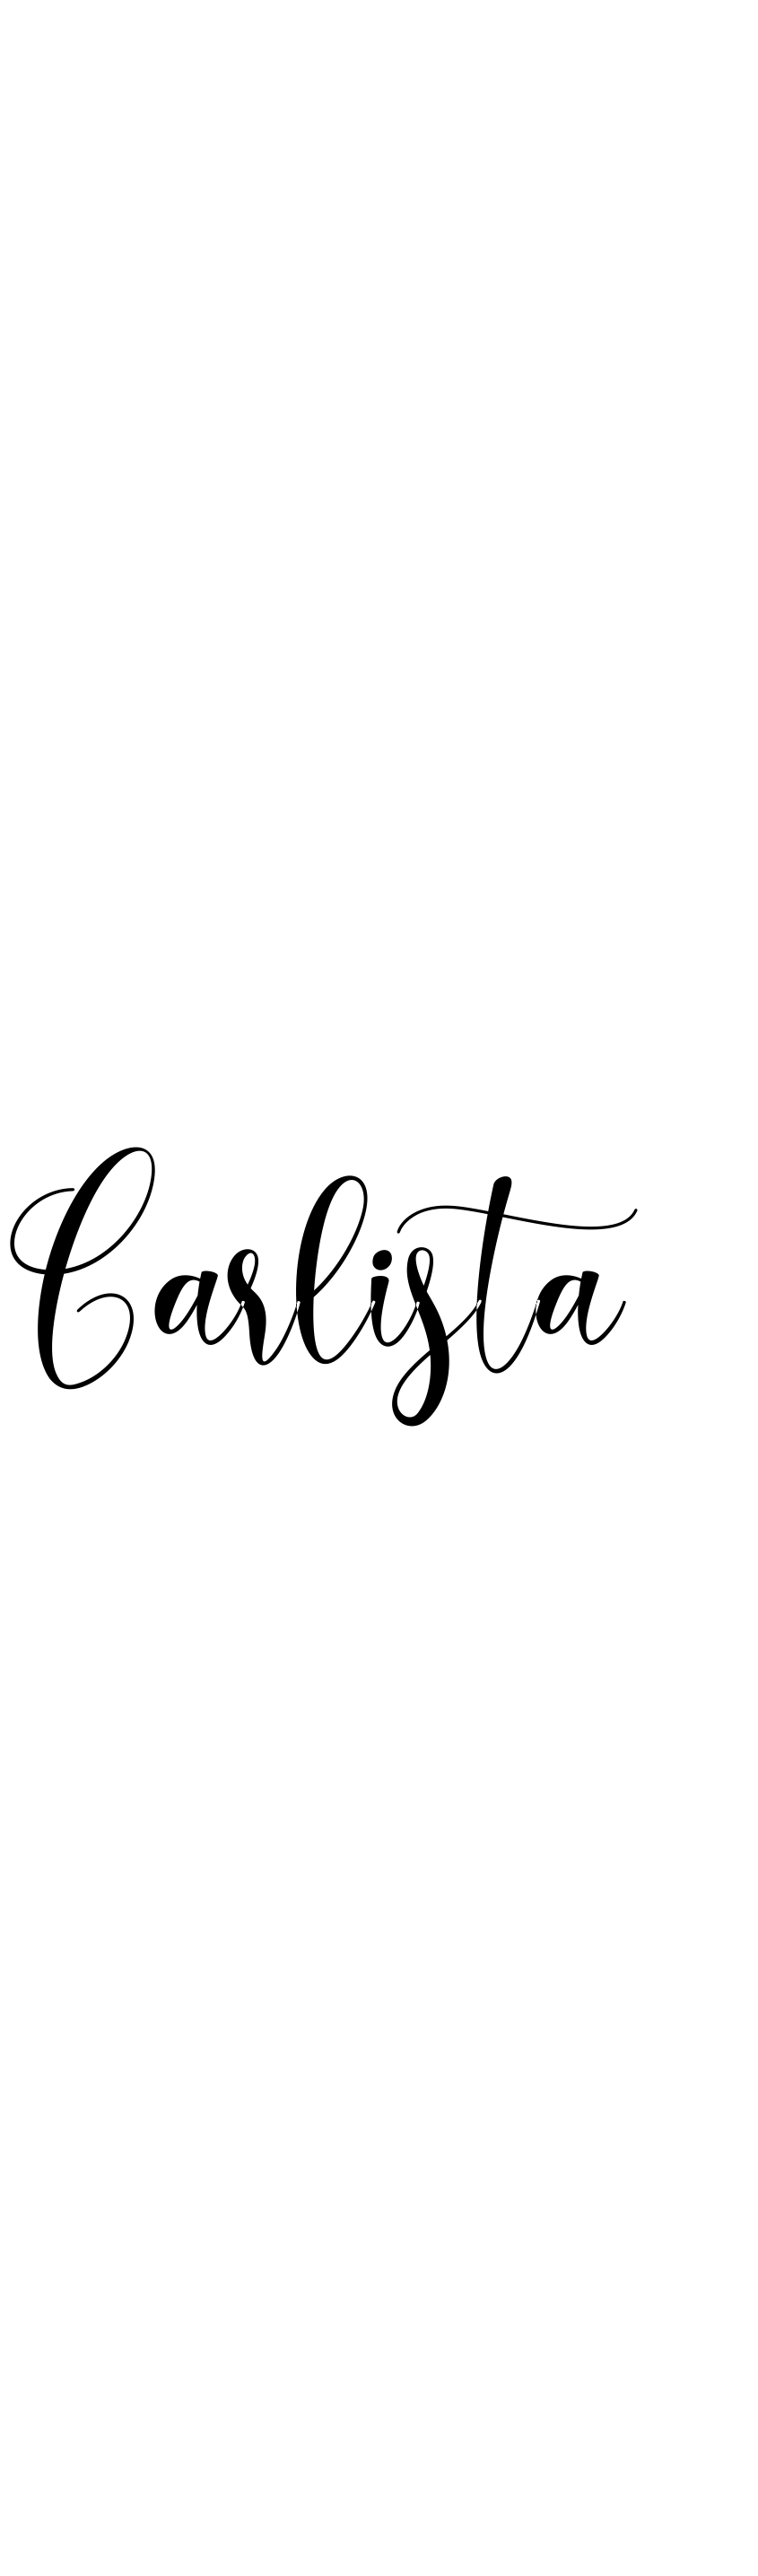 Preview Carlista